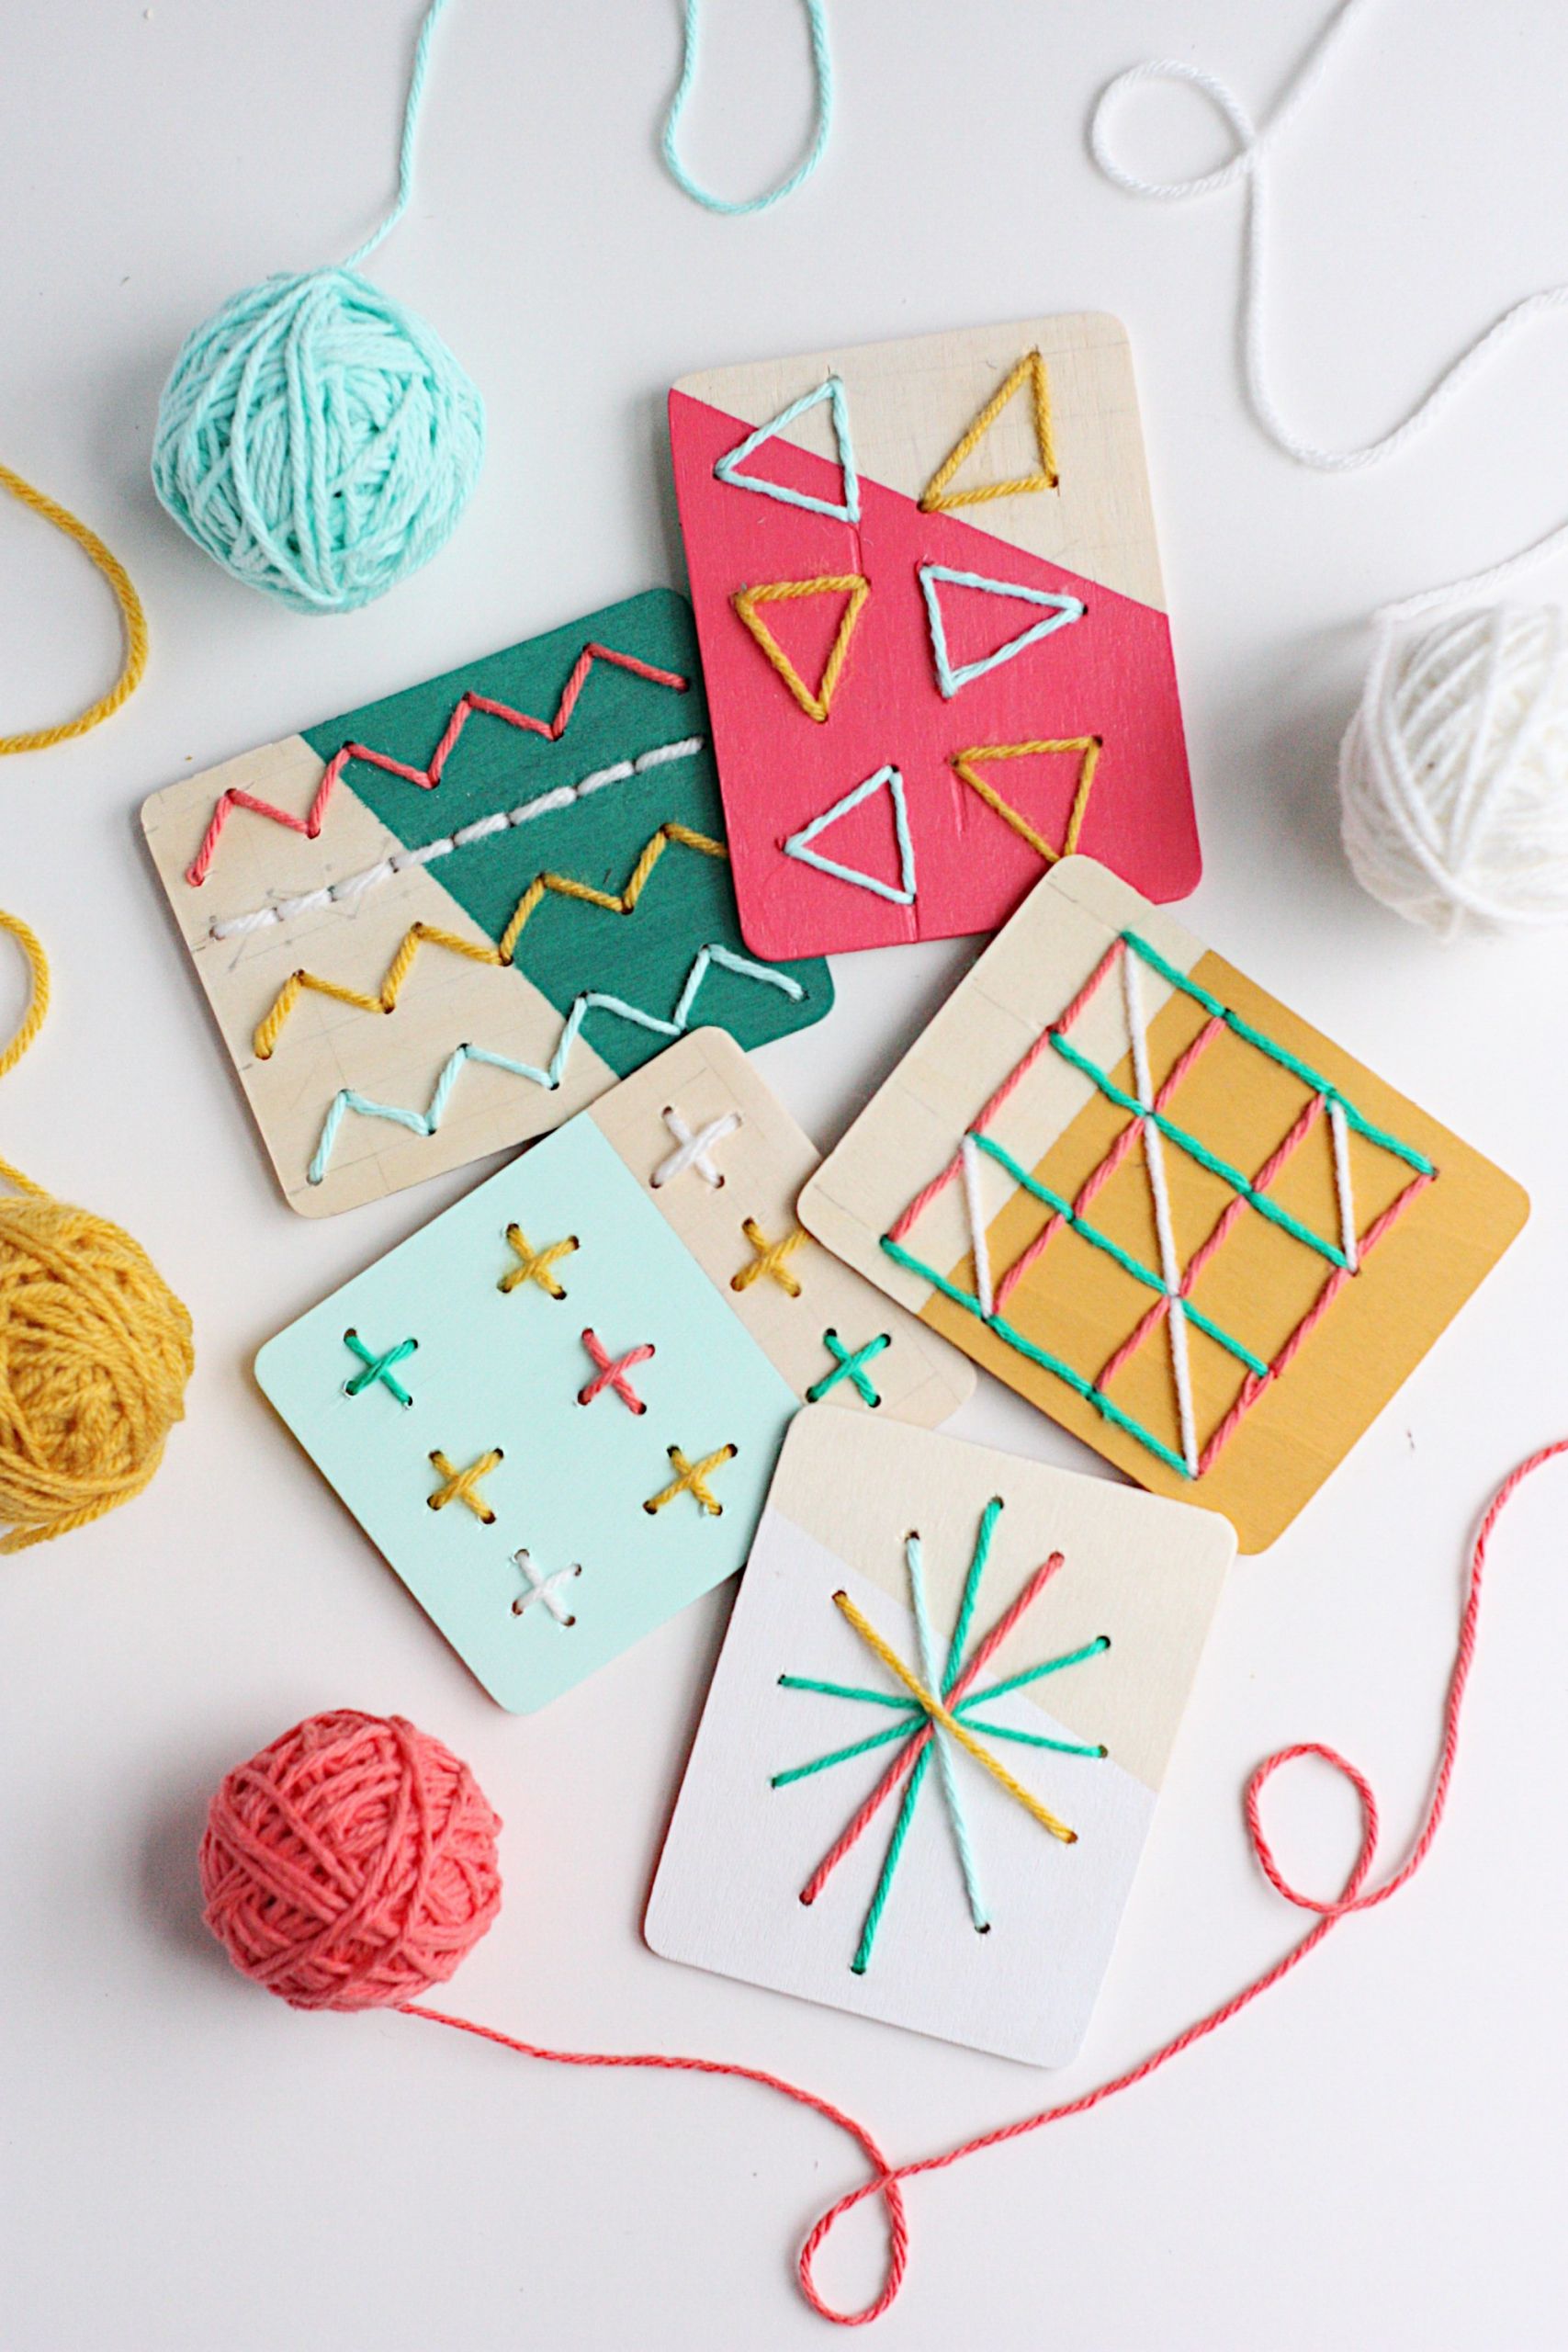 Craft For Children
 11 DIY Yarn Crafts That Will Amaze Your Kids Shelterness